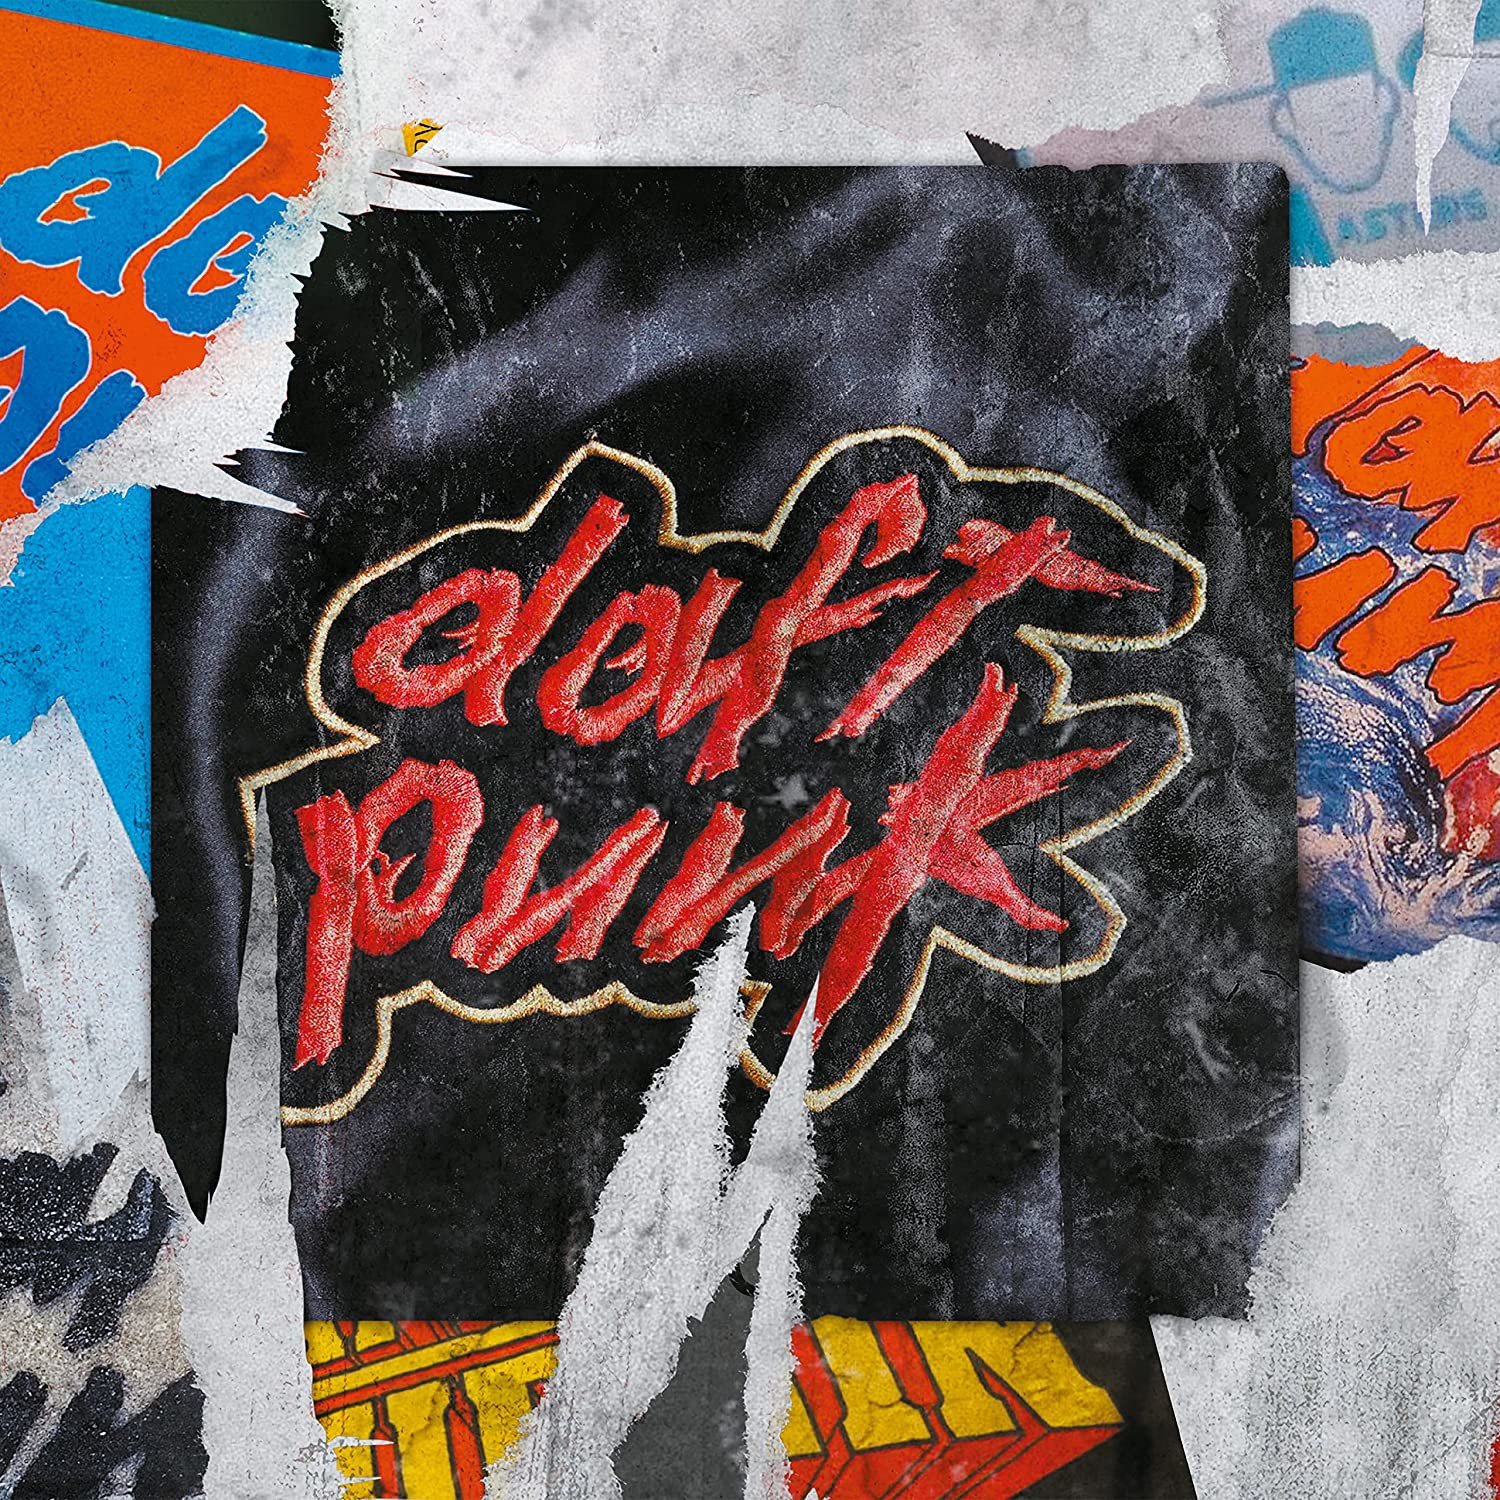 Daft Punk - Homework (Remixes) - 2LP (LP)